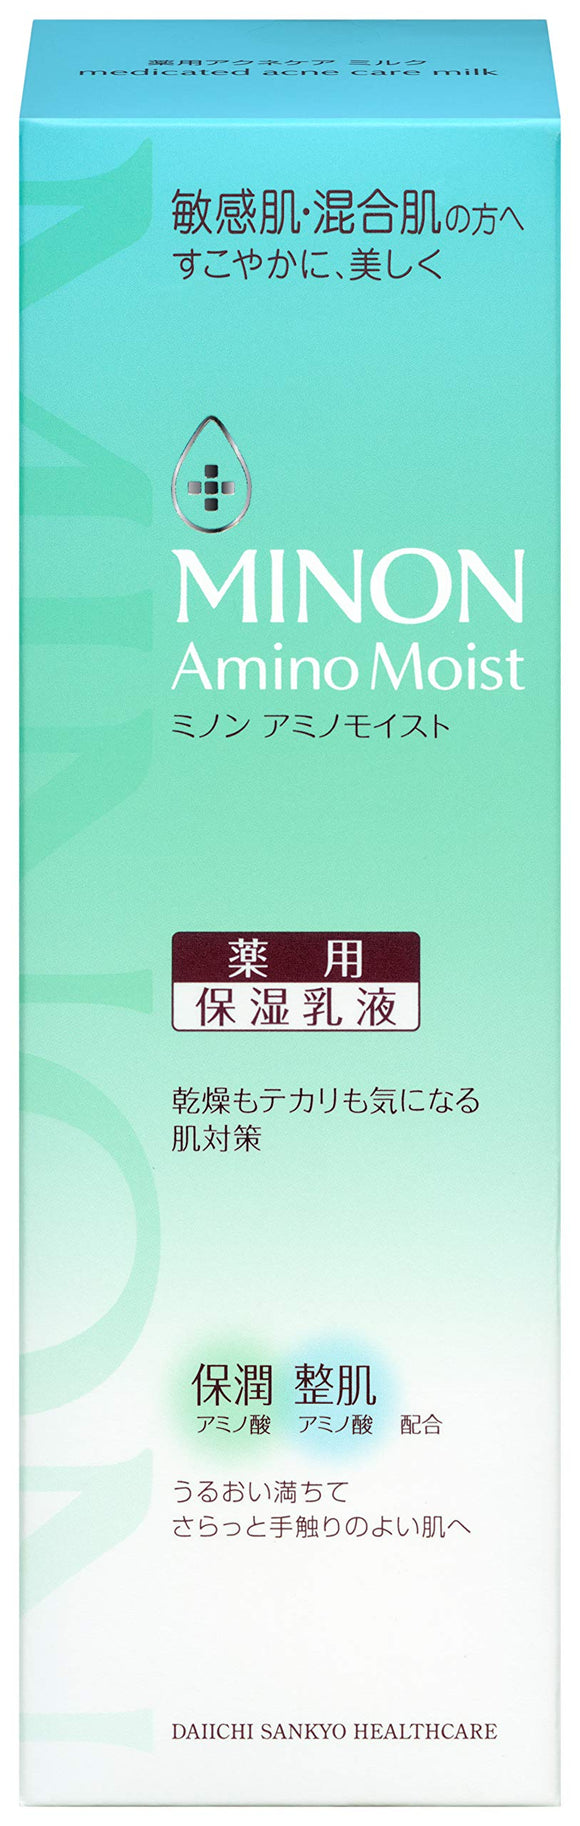 Daiichi Sankyo Healthcare Minon aminomoist medicated acne care milk 100g